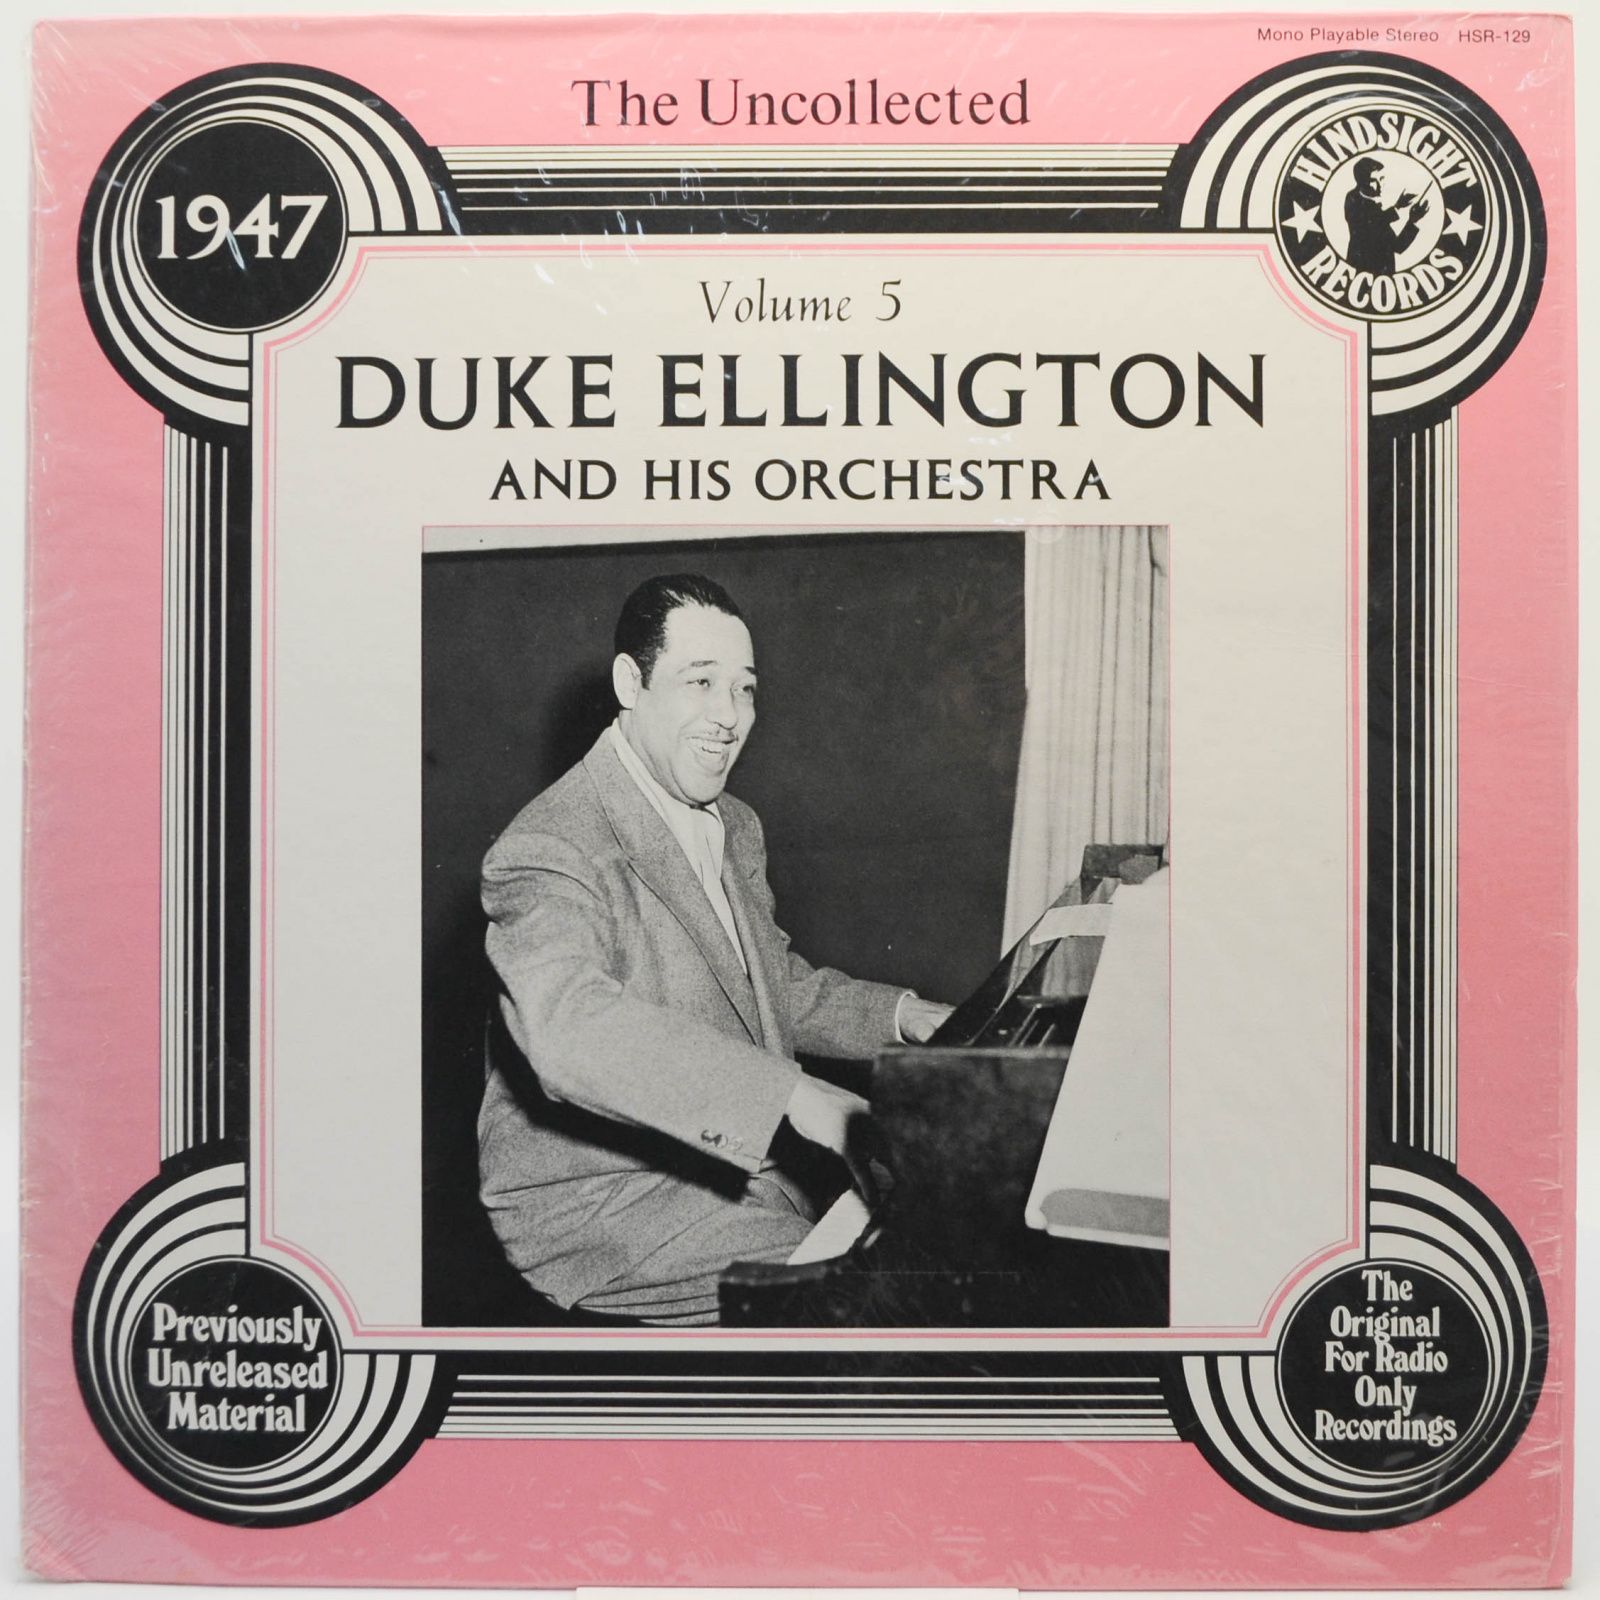 Duke Ellington And His Orchestra — The Uncollected Duke Ellington And His Orchestra Volume 5 - 1947, 1978